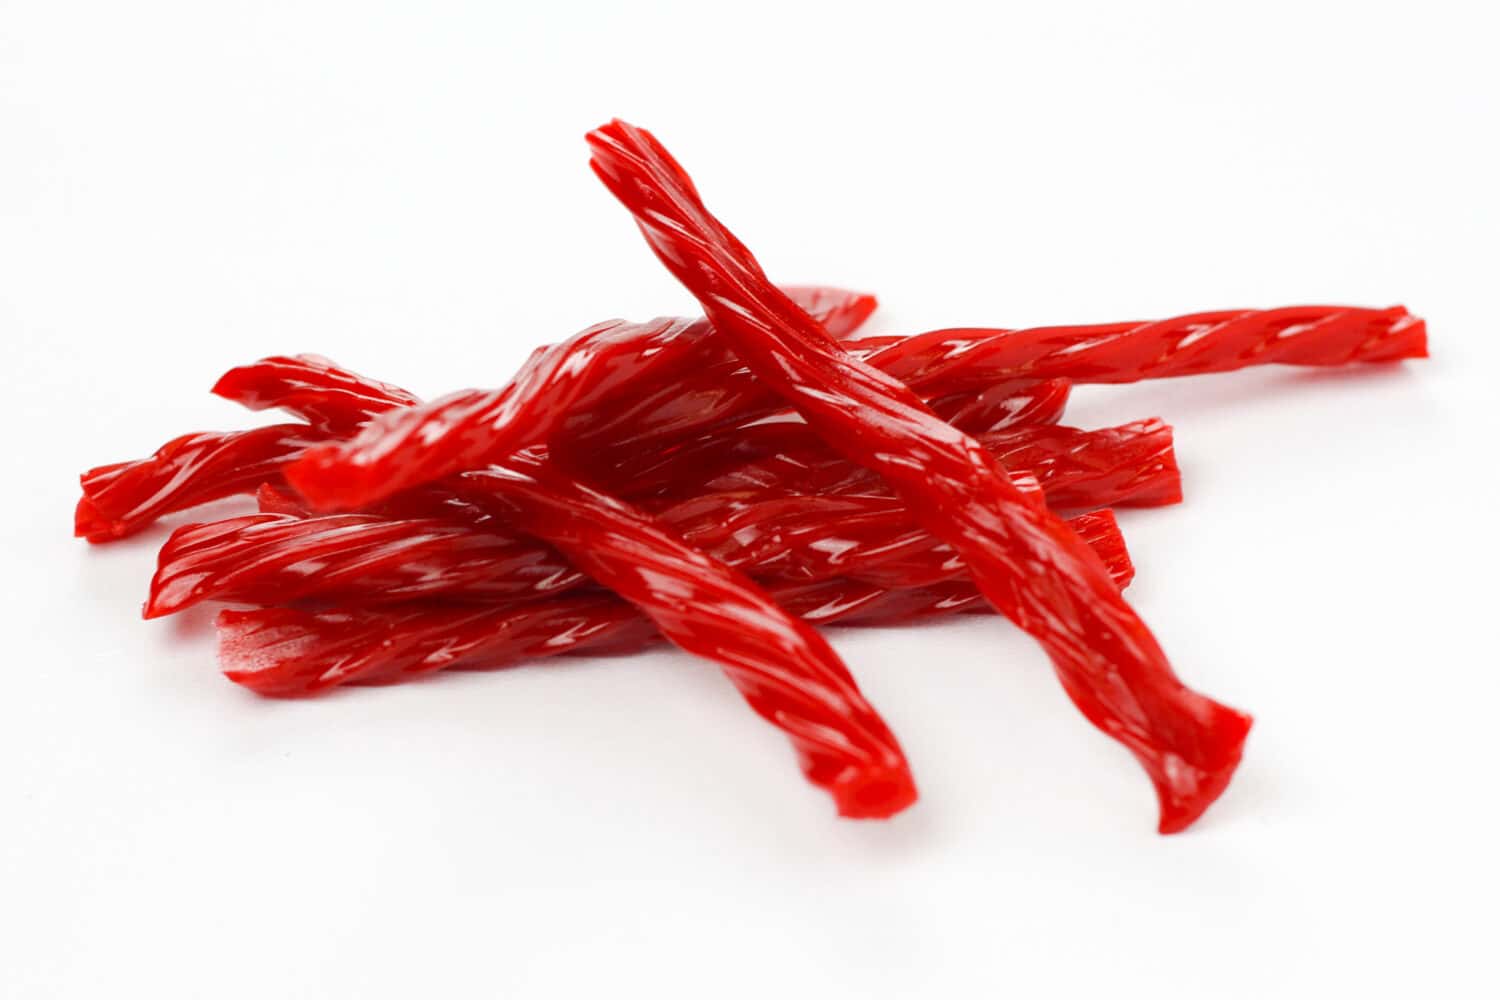 Red Licorice - Stock Image